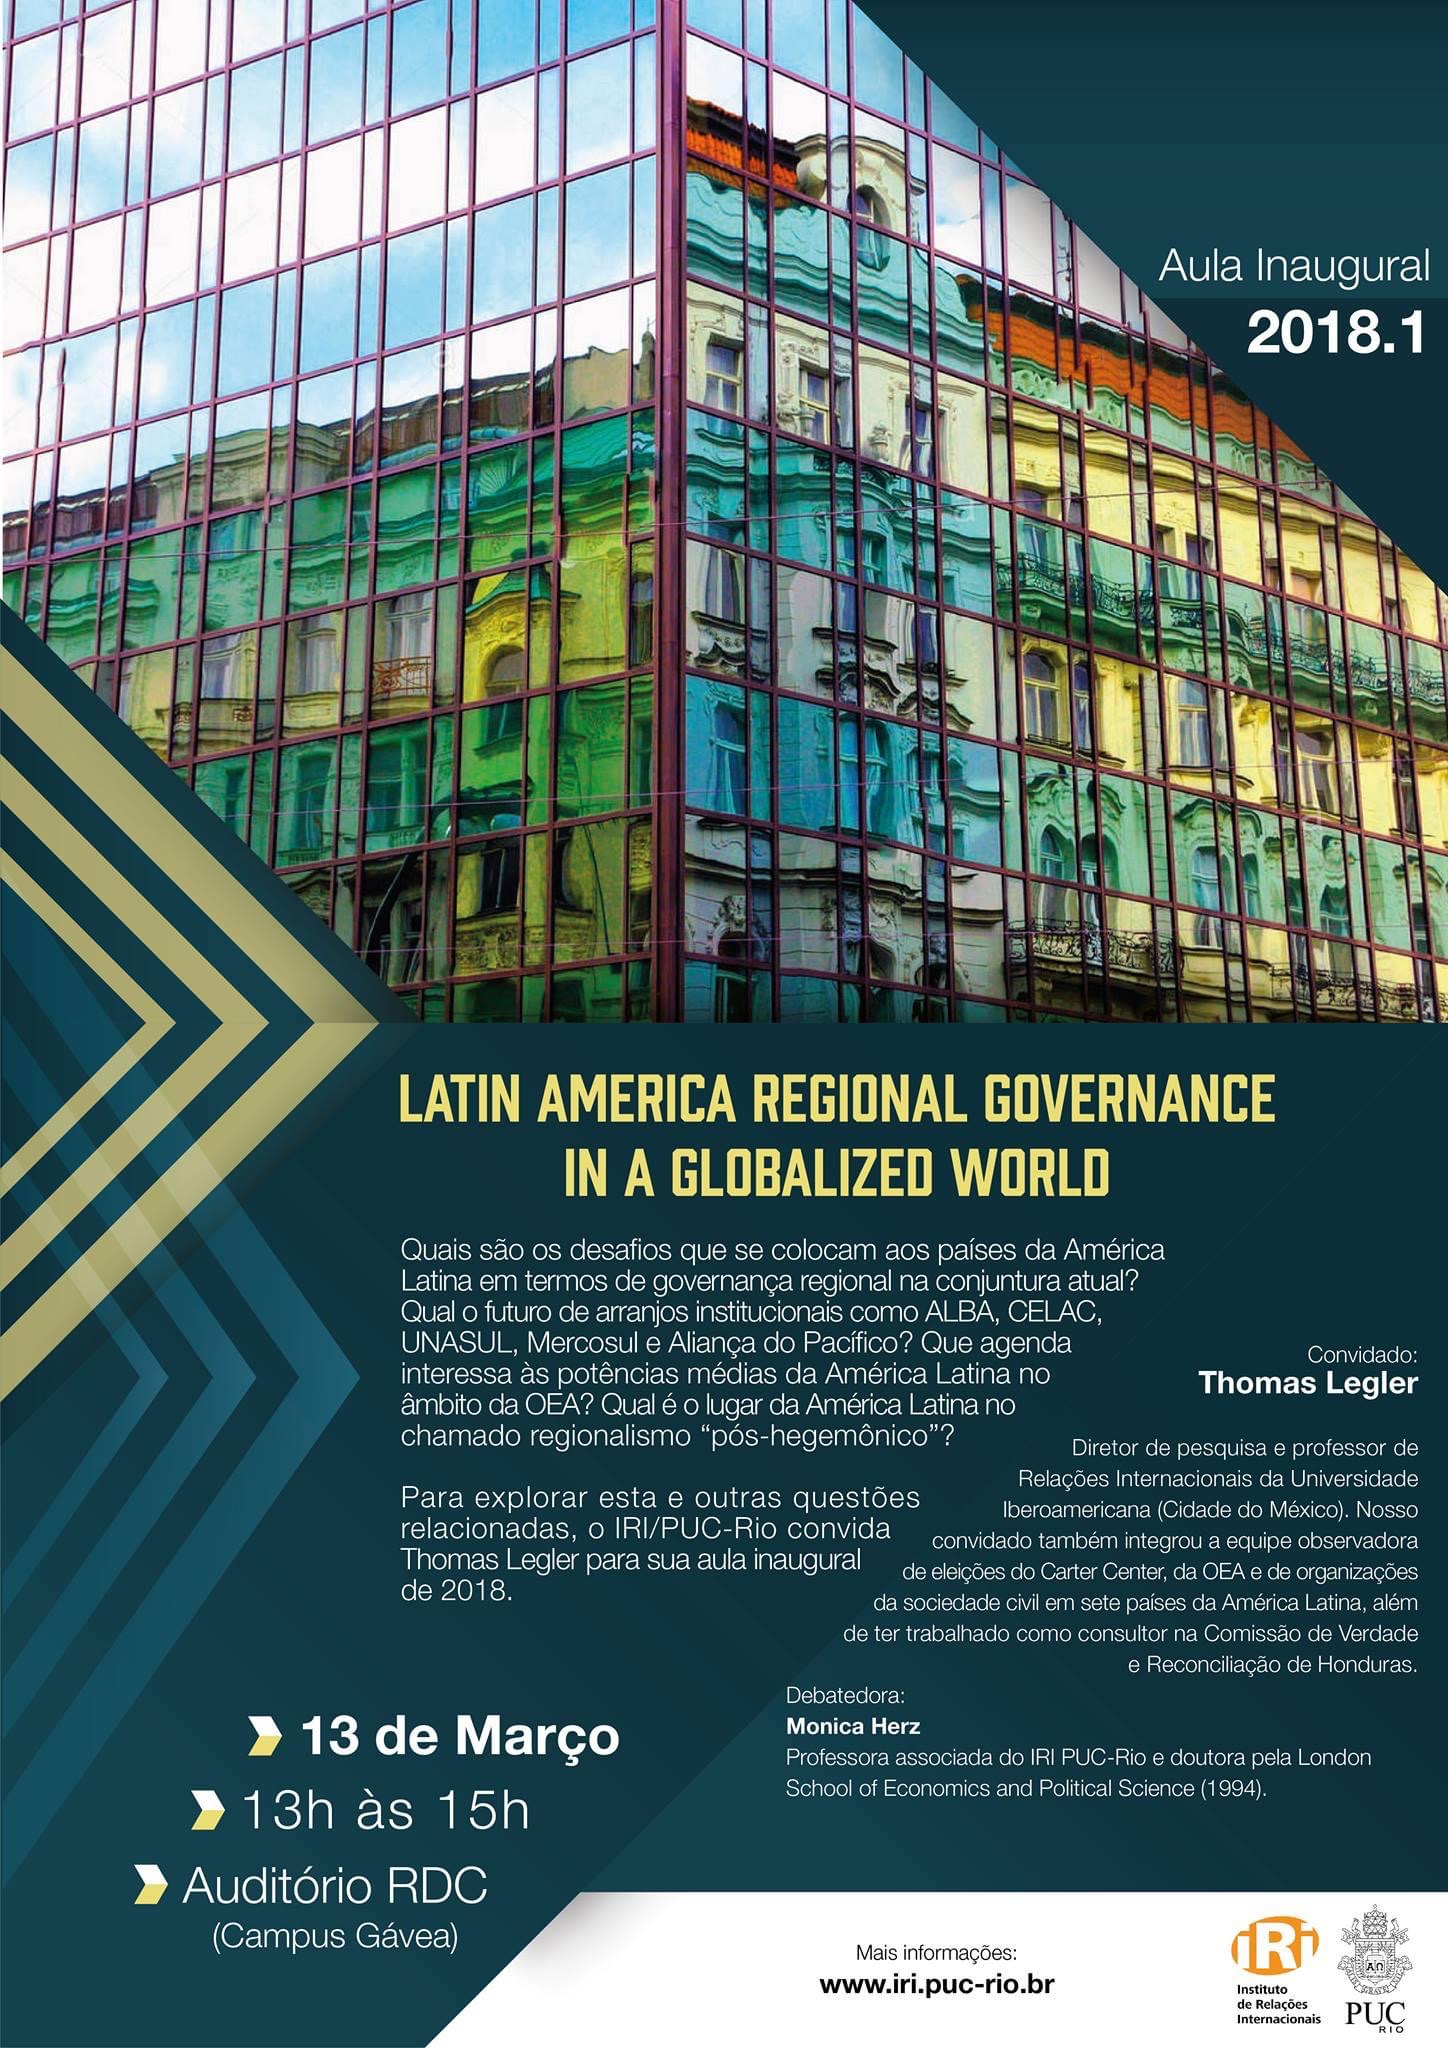 Latin American regional governance in a globalized world